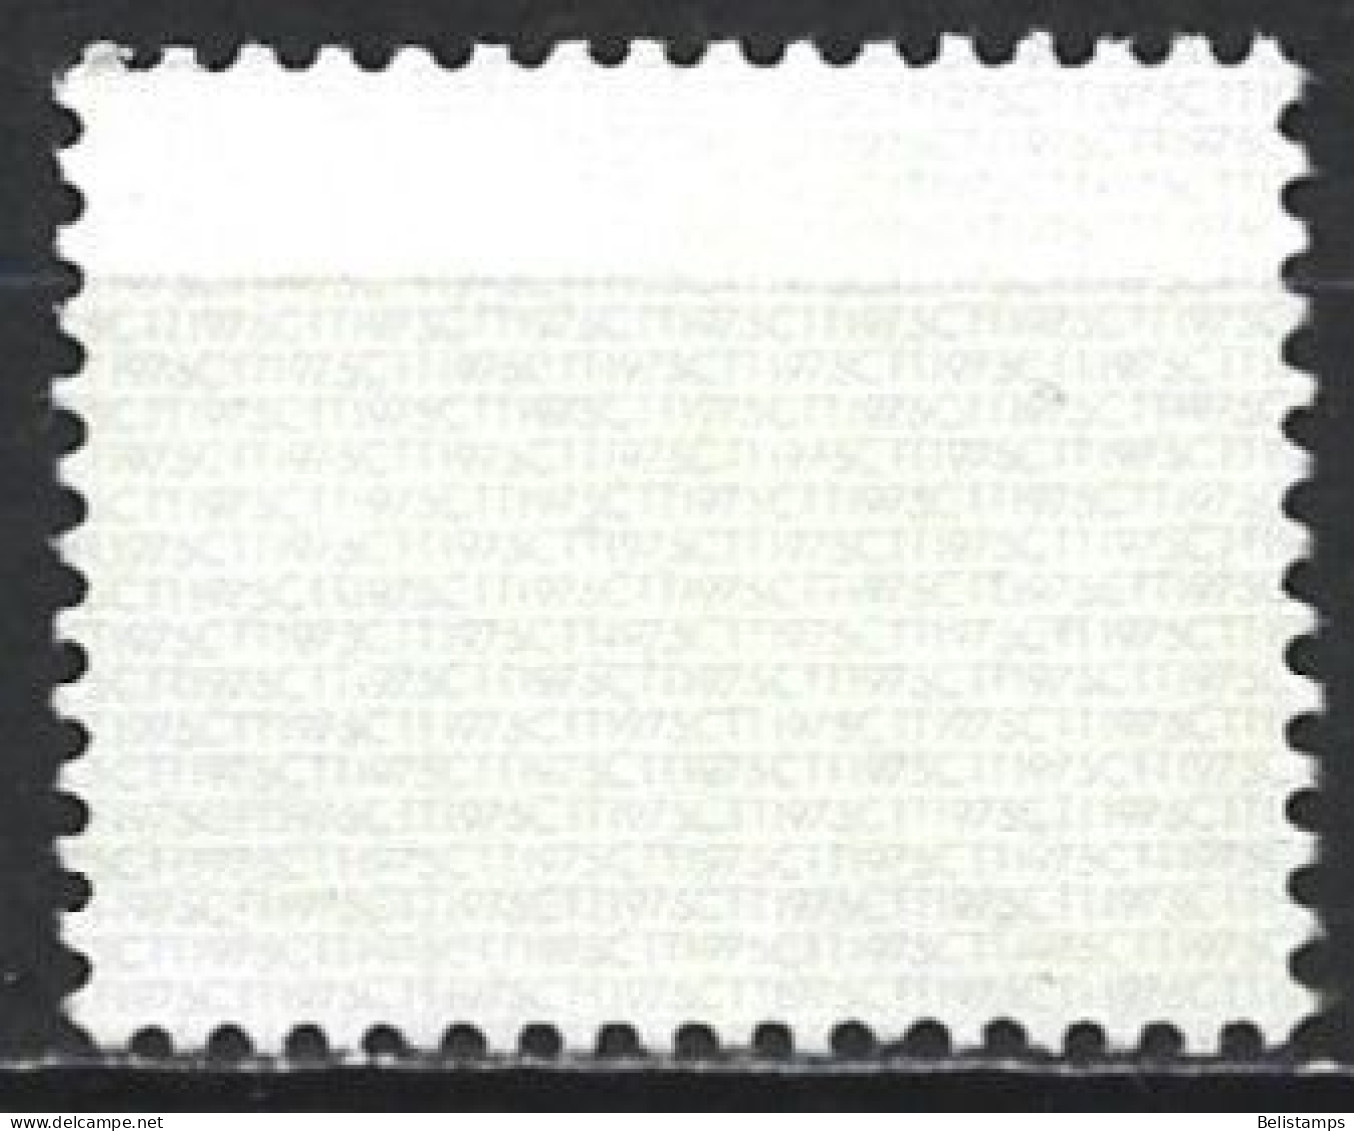 Portugal 1975. Scott #1209a (U) City Hall, Bragança  *Complete Issue* - Used Stamps